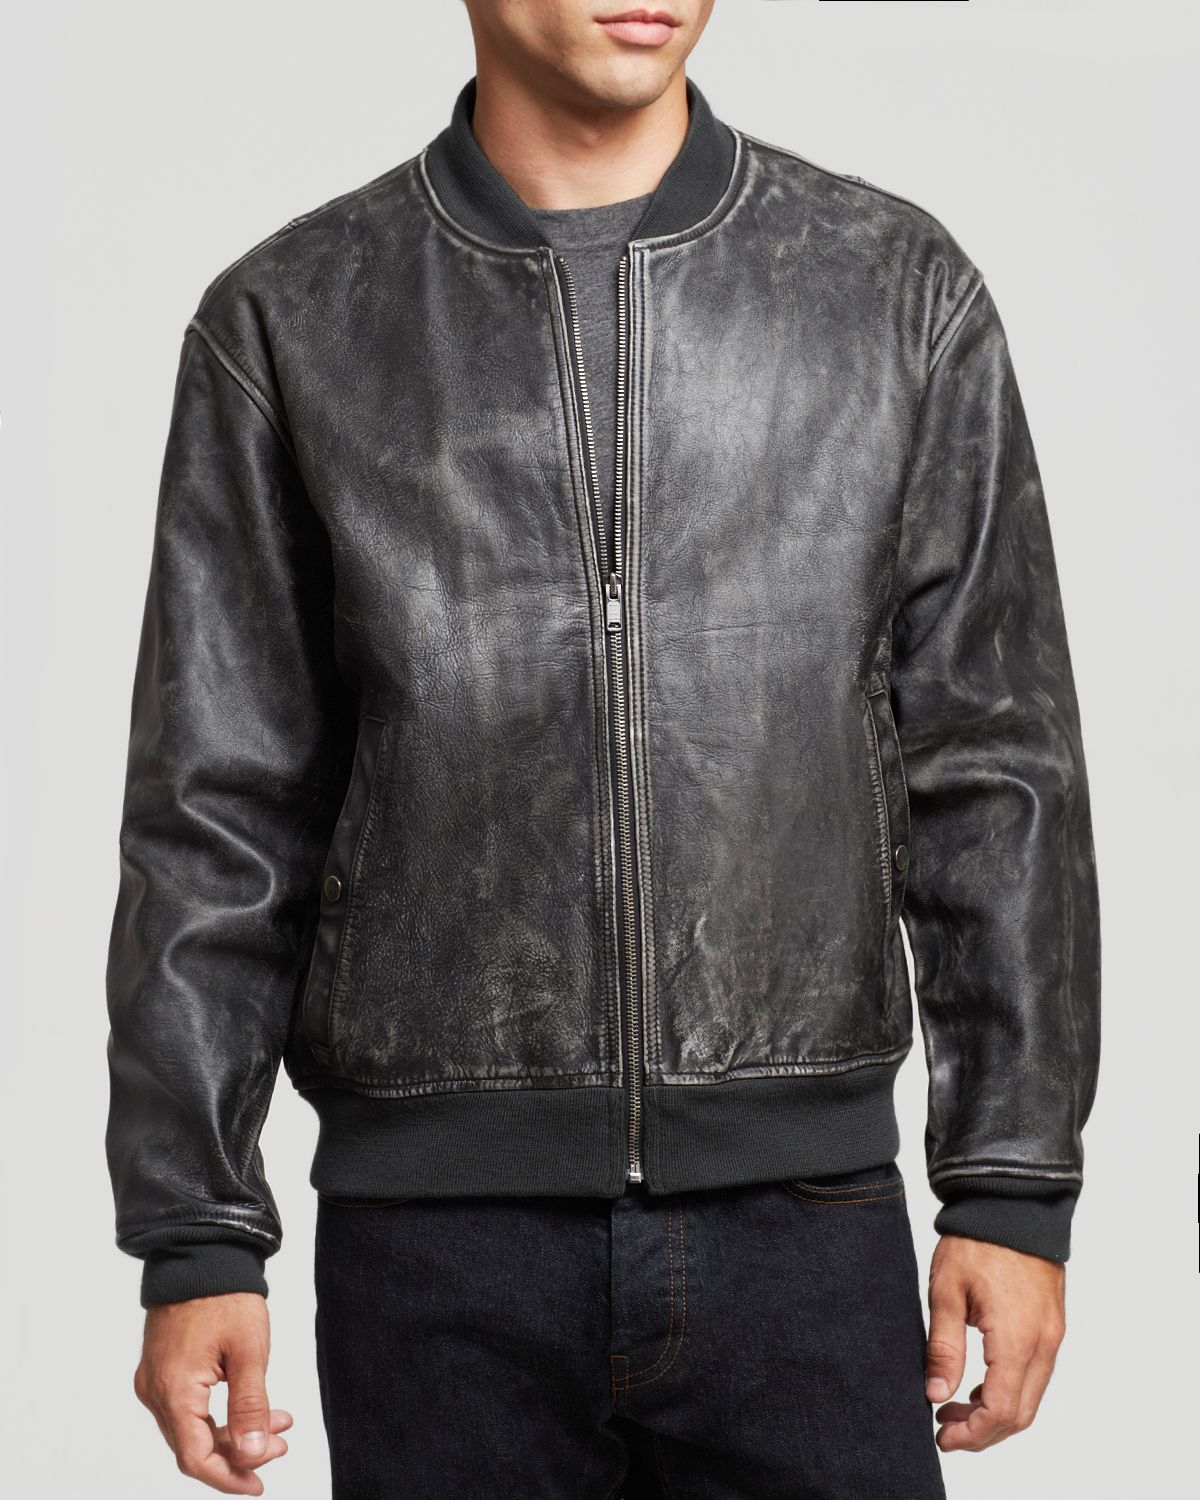 Marc by marc jacobs Trevor Leather Jacket in Black for Men | Lyst